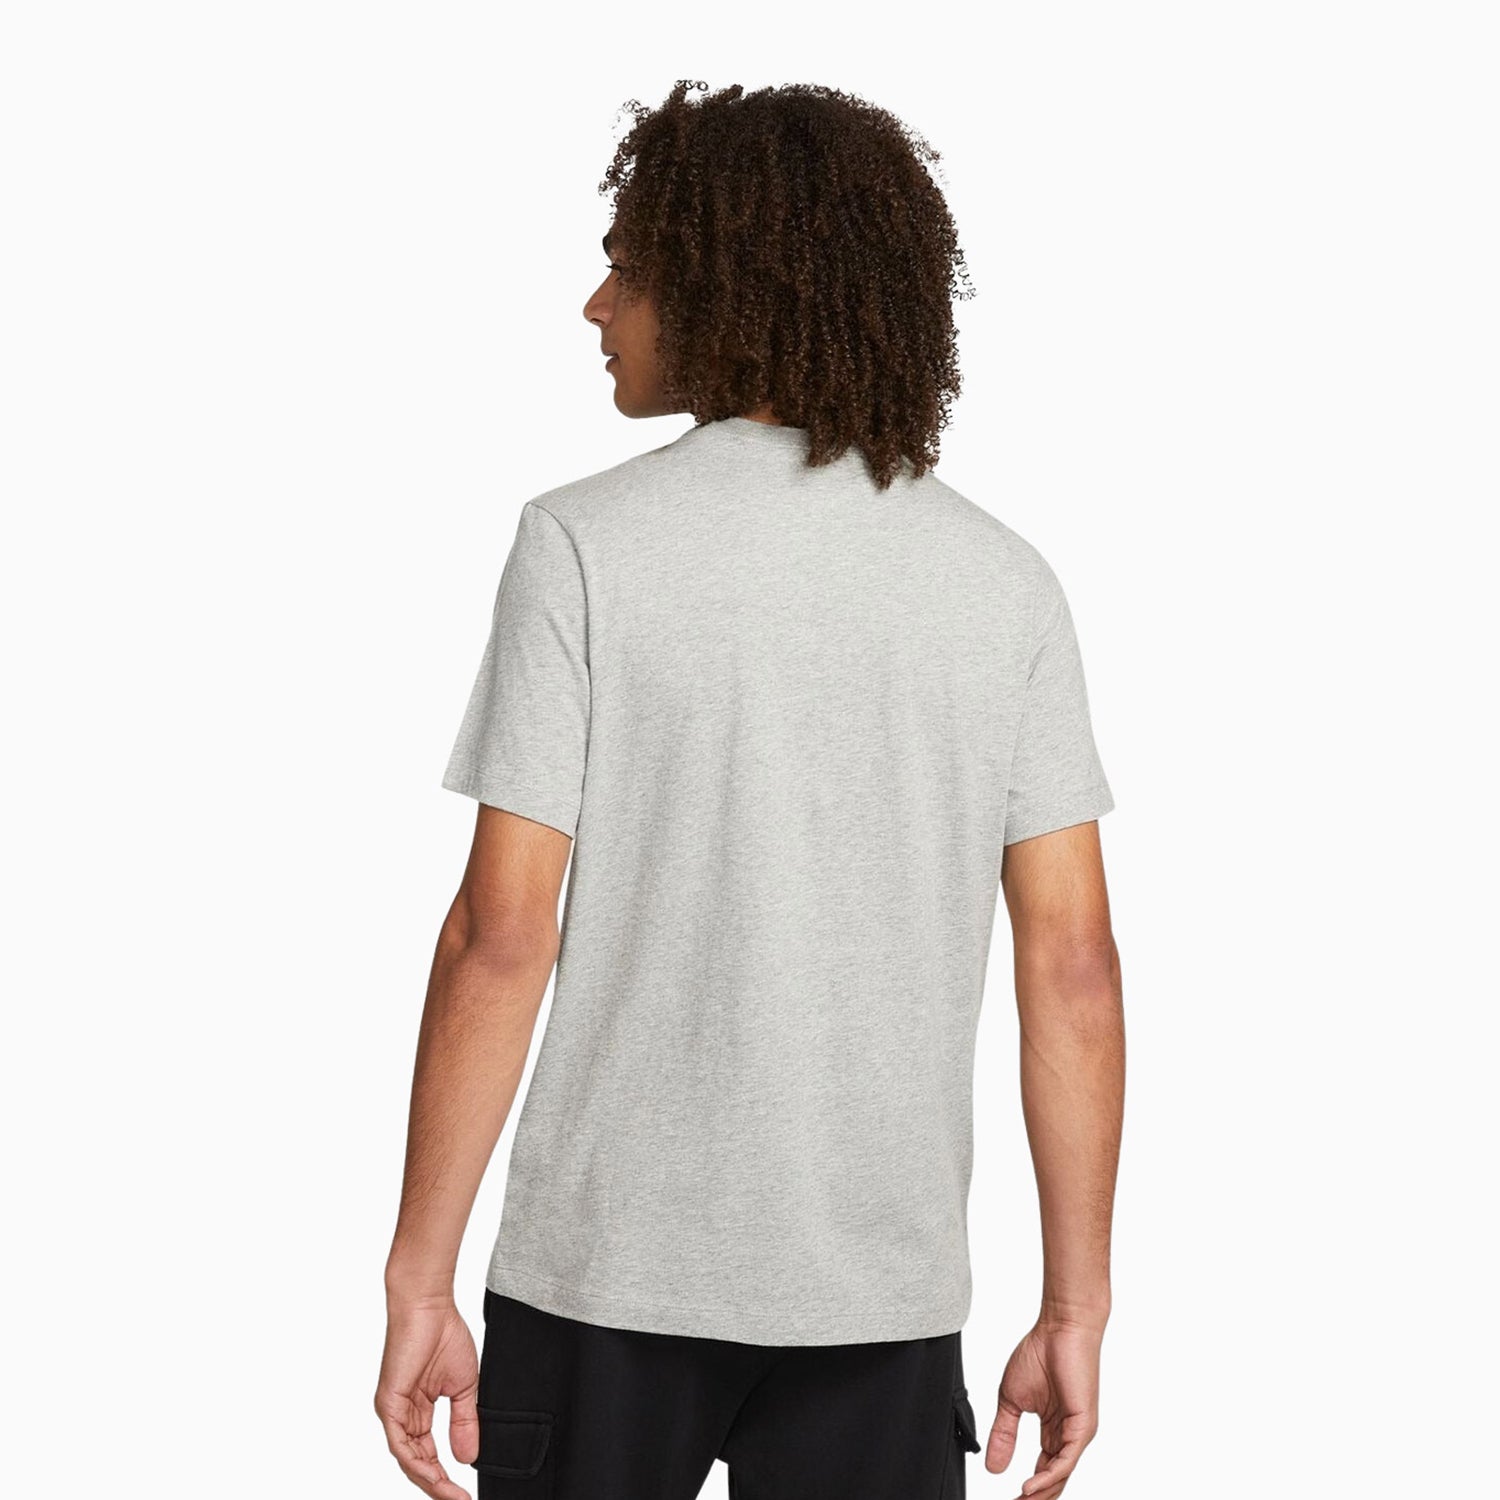 mens-nike-sportswear-swoosh-t-shirt-dn5243-063